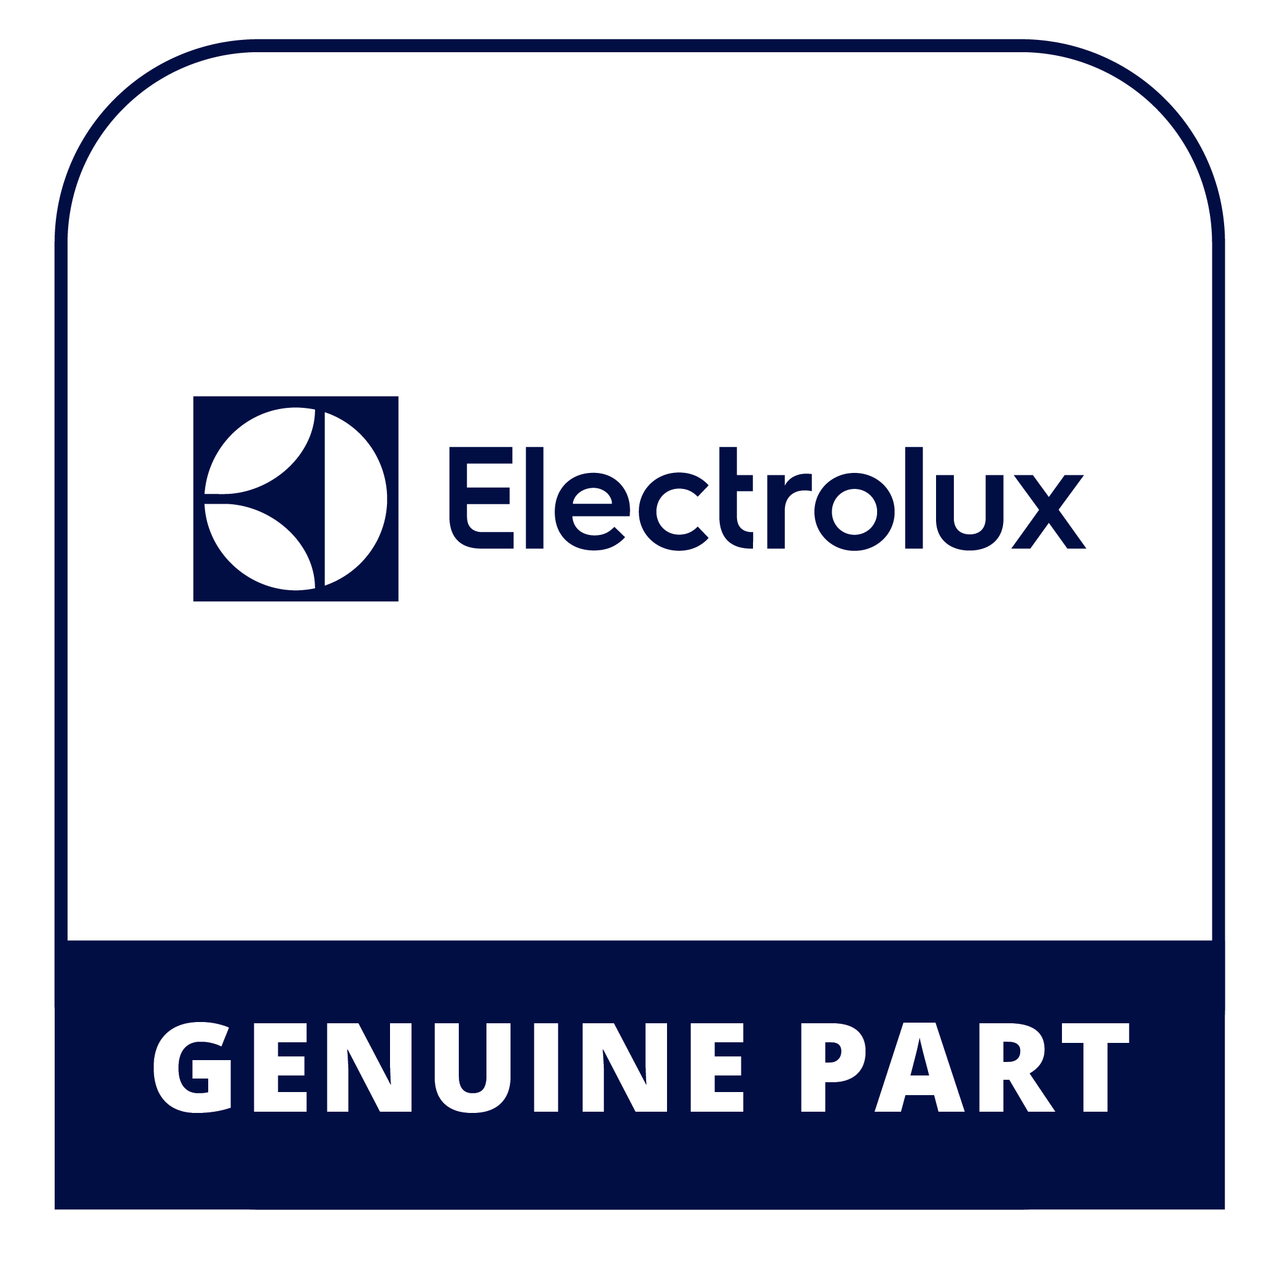 Frigidaire - Electrolux 5304476049 Capacitor - Genuine Electrolux Part